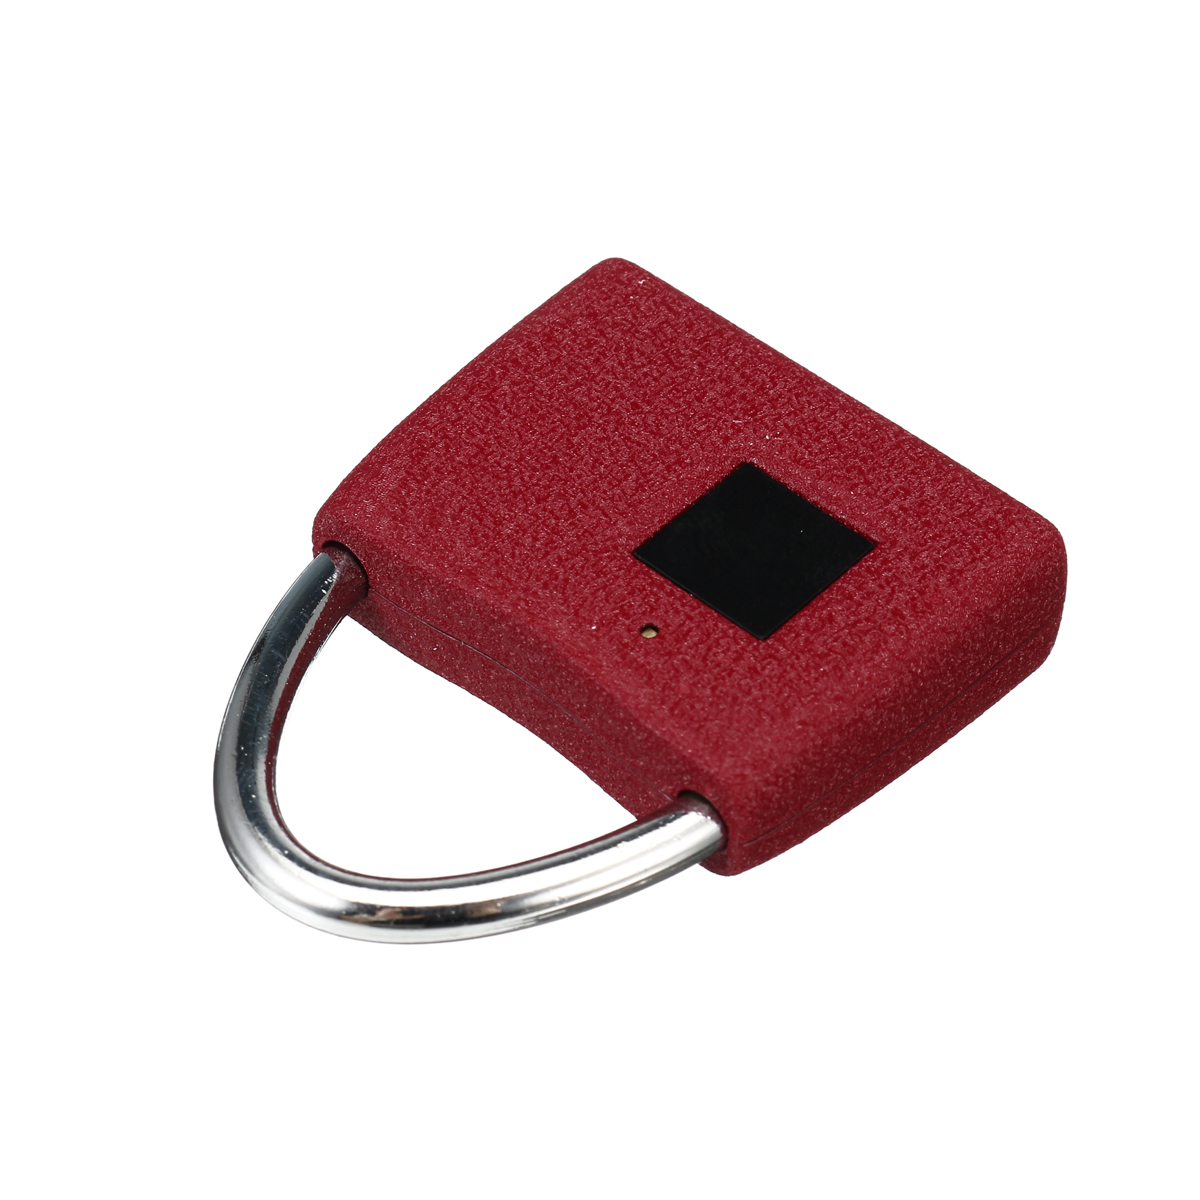 Portable-Smart-Keyless-Luggage-Door-Lock-Anti-Theft-Fingerprint-Security-Padlock-1456418-4